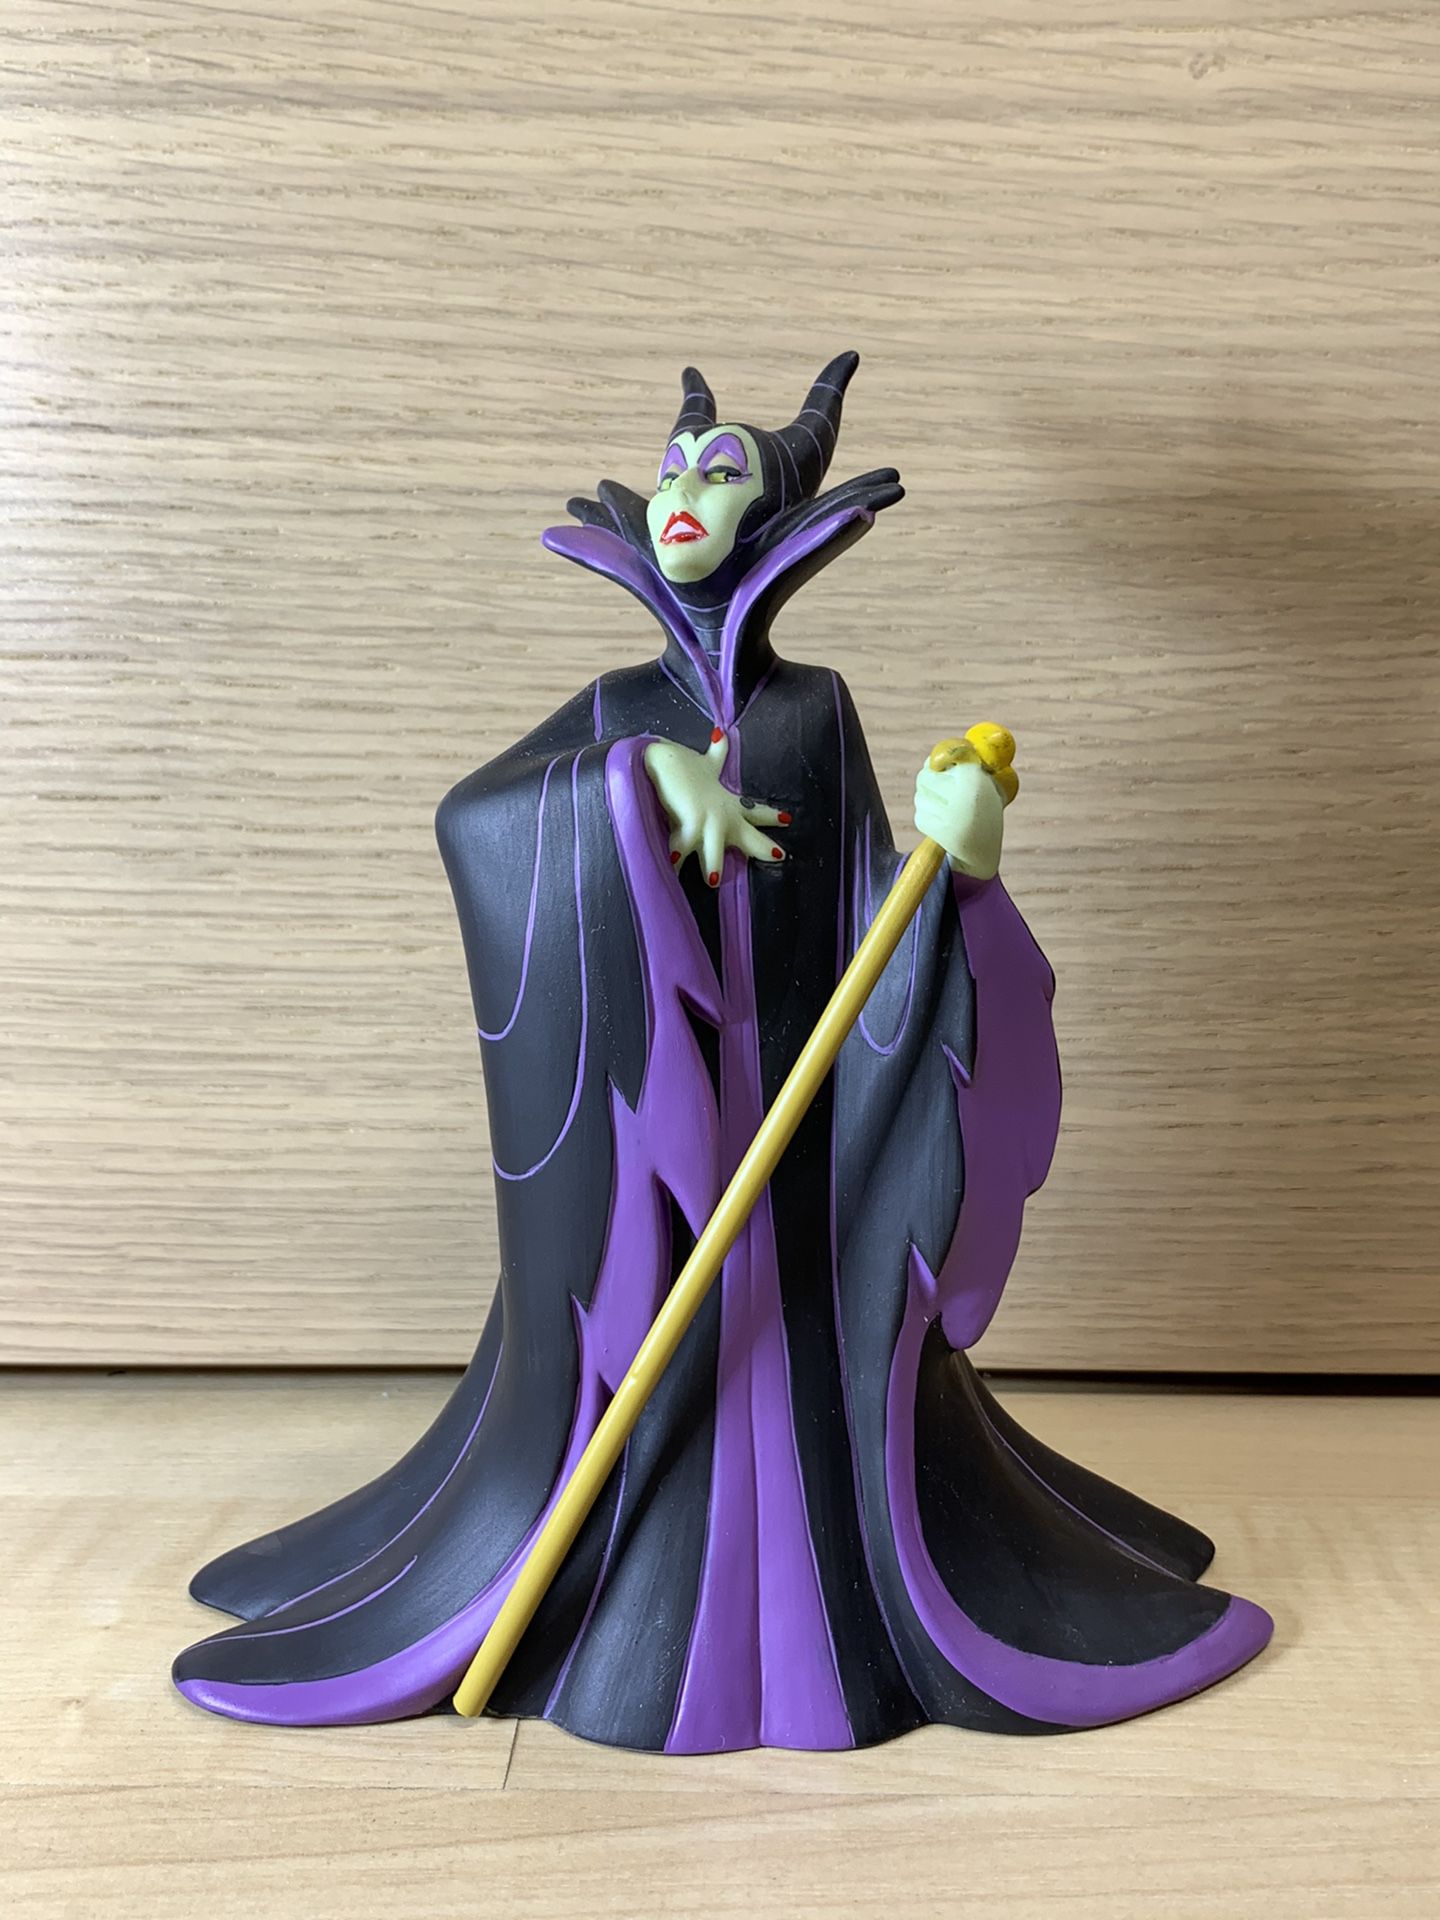 Disney's Sleeping Beauty "Maleficent Porcelain Ceramic Figurine”